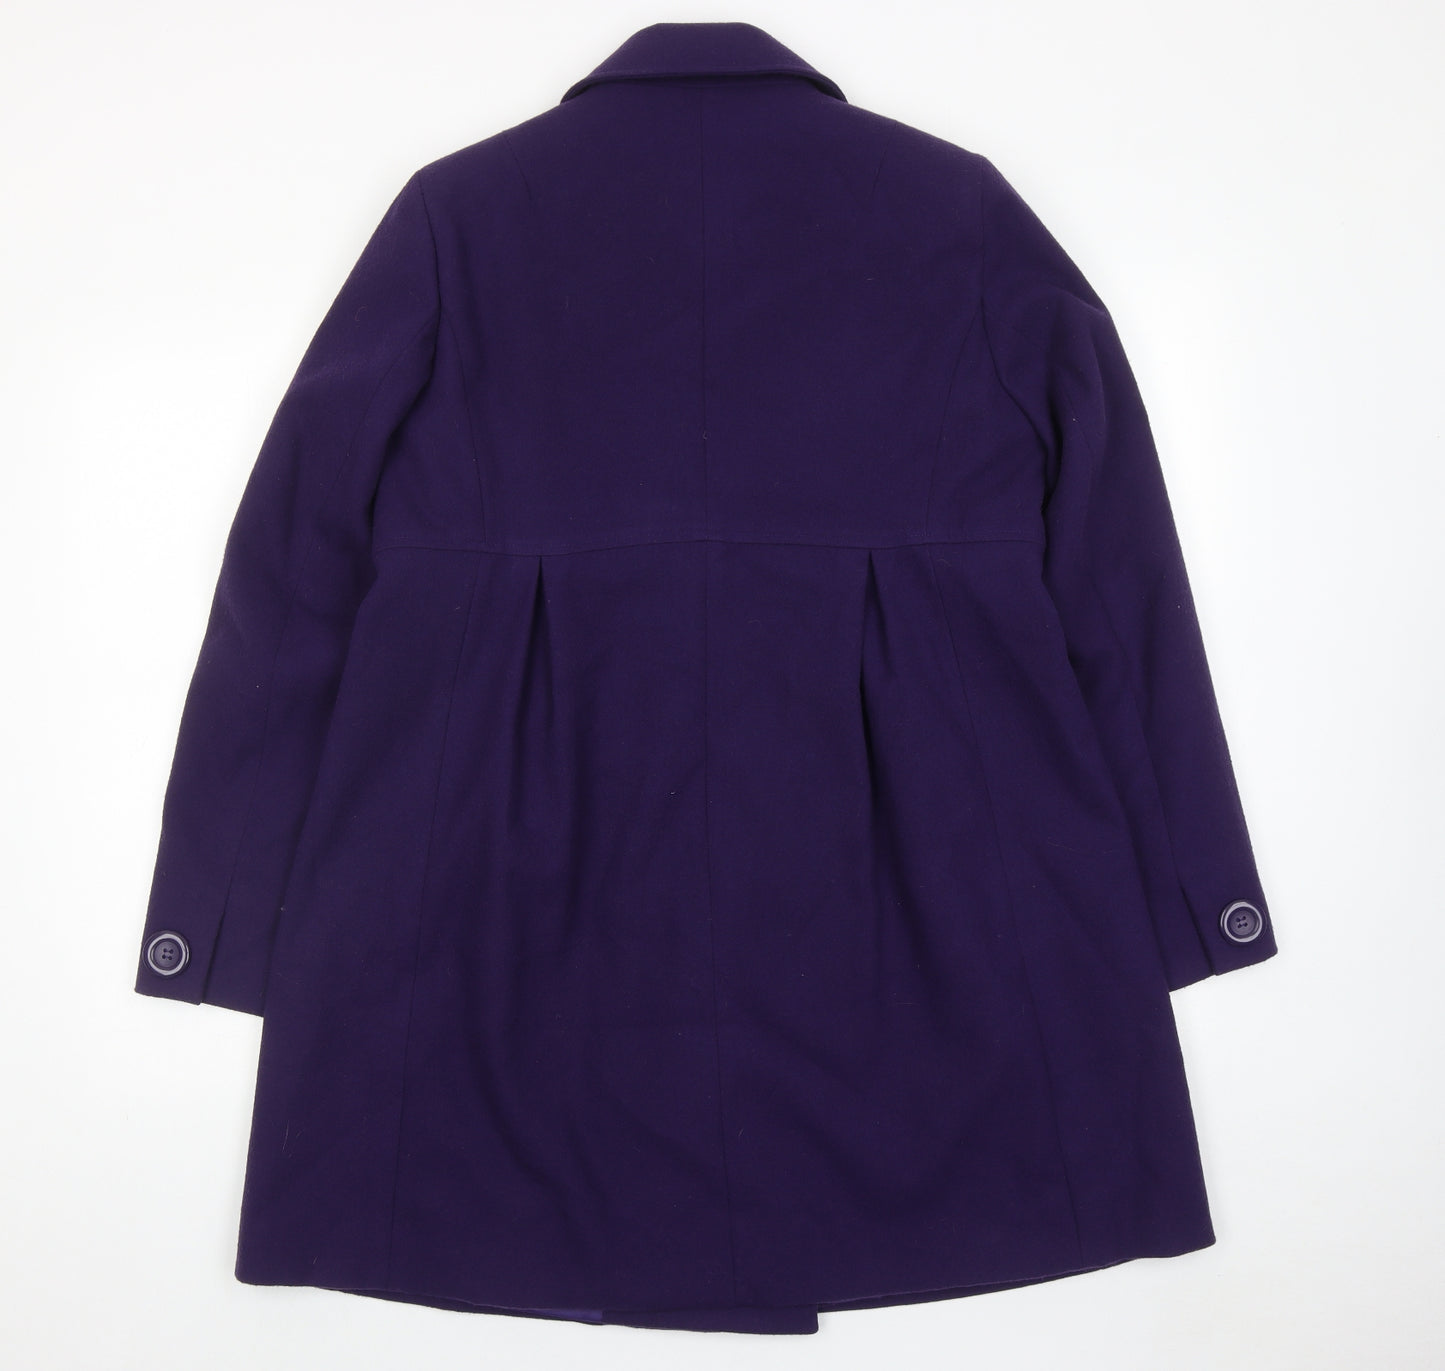 Agenda Womens Purple Pea Coat Coat Size 14 Button